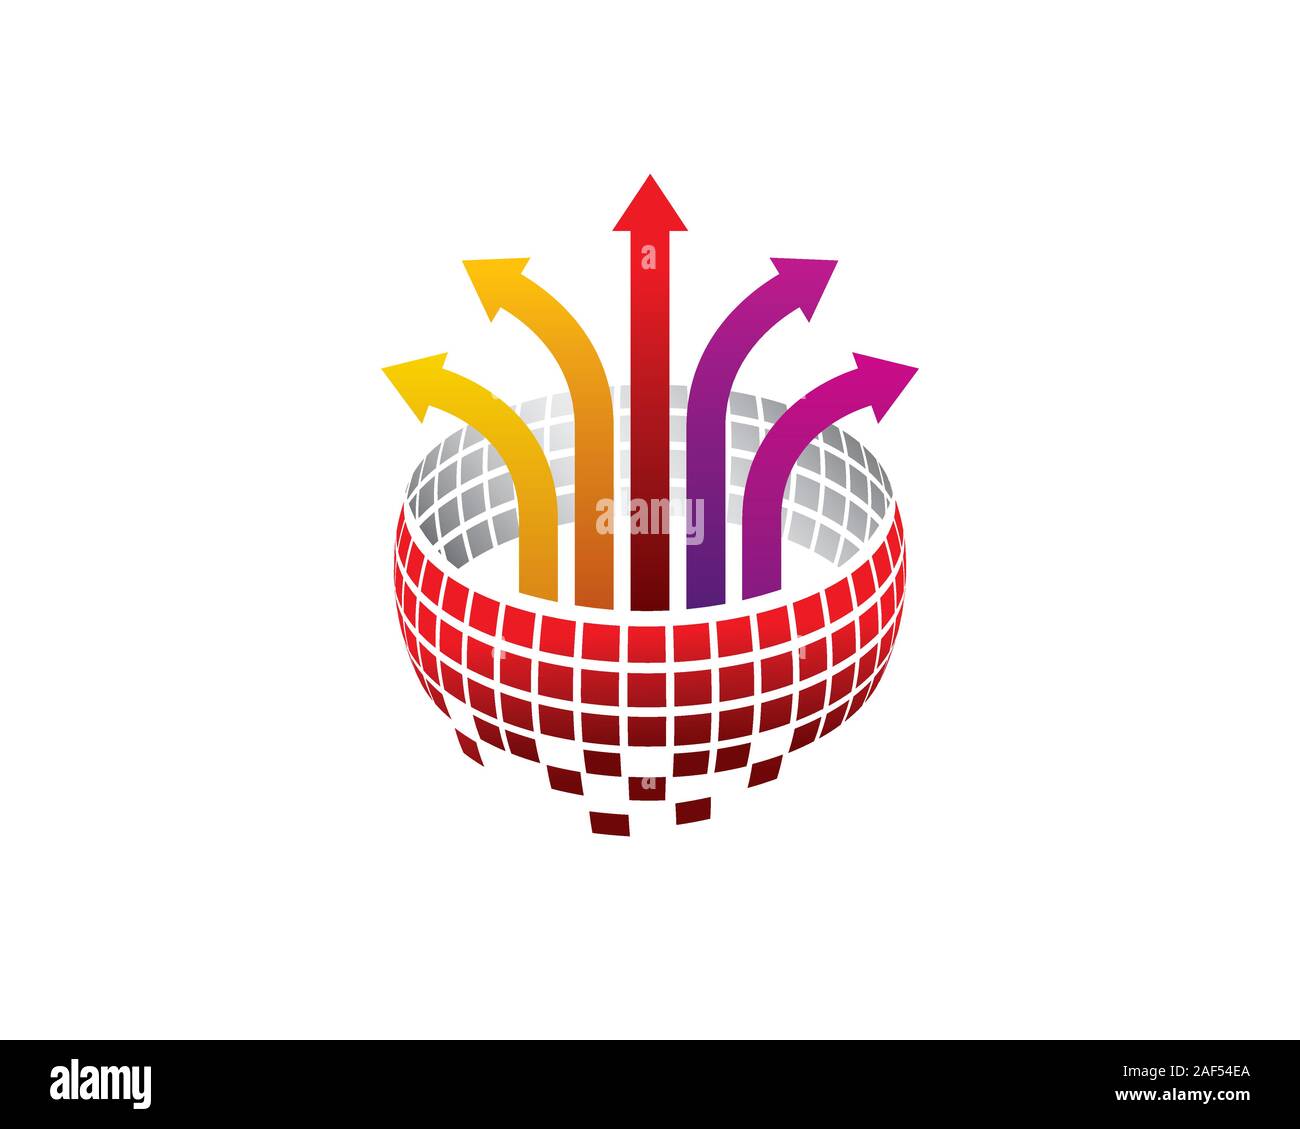 Daten Analyse Arbeitsblatt internet Logo Stock Vektor